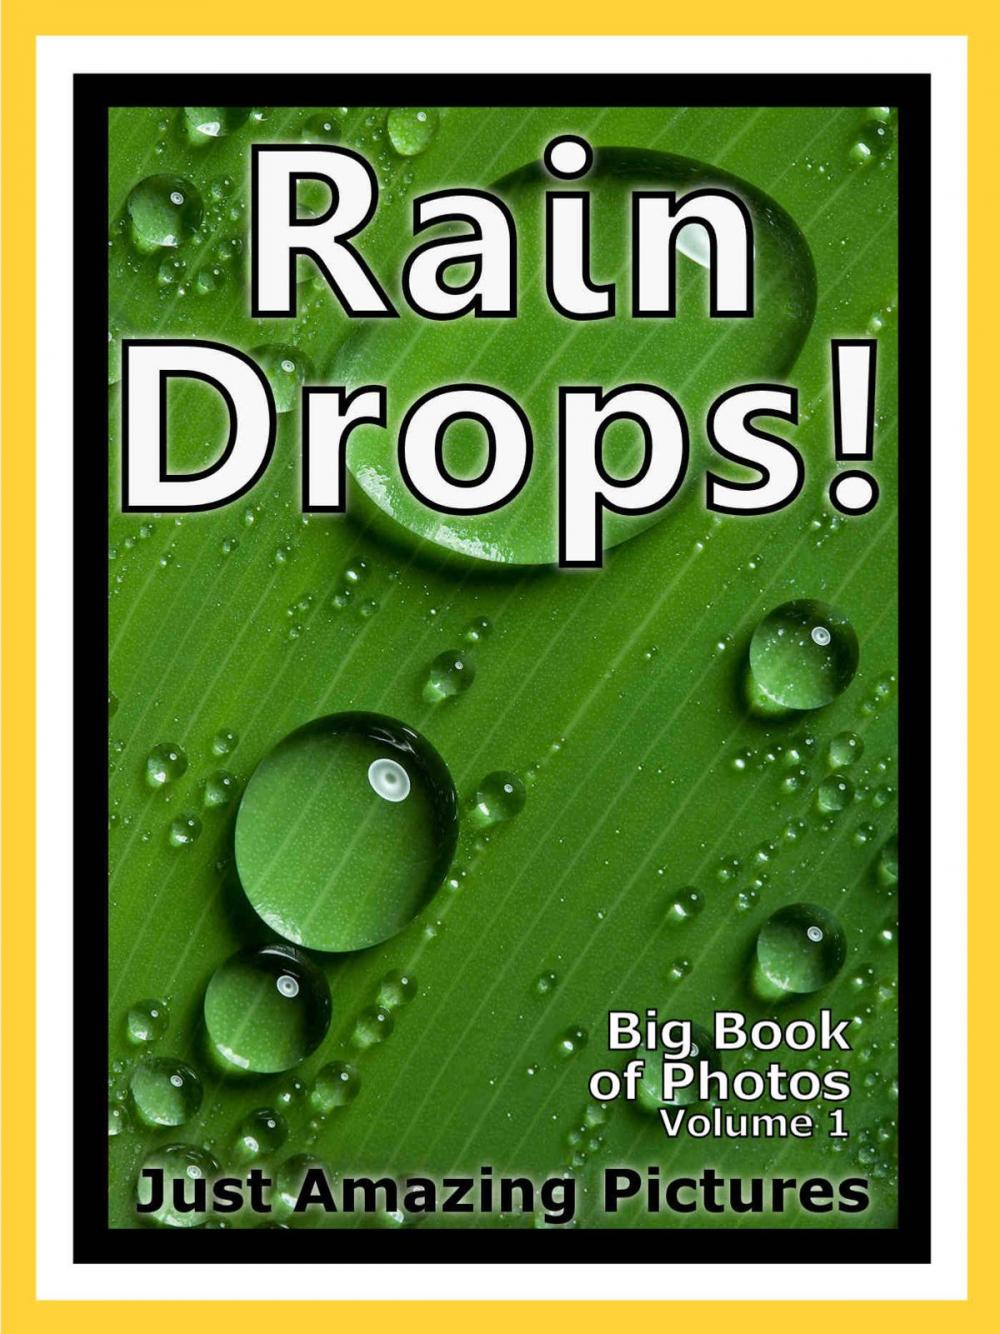 Big bigCover of Just Rain Drop Photos! Big Book of Photographs & Pictures of Water Rain Drops, Vol. 1